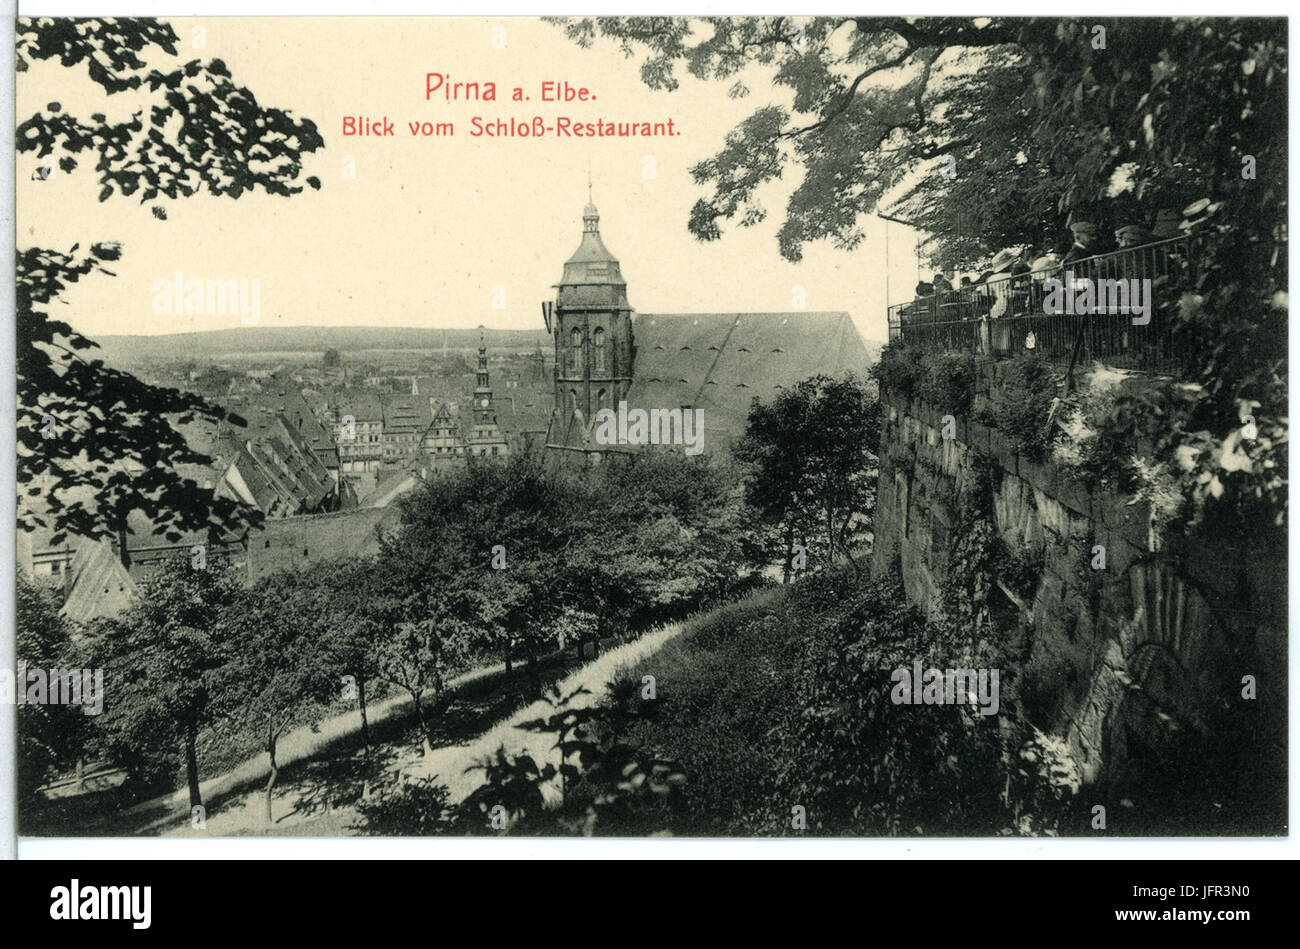 13555-Pirna-1911-Blick vom Schloßrestaurant-Brück & Sohn Kunstverlag Stock Photo